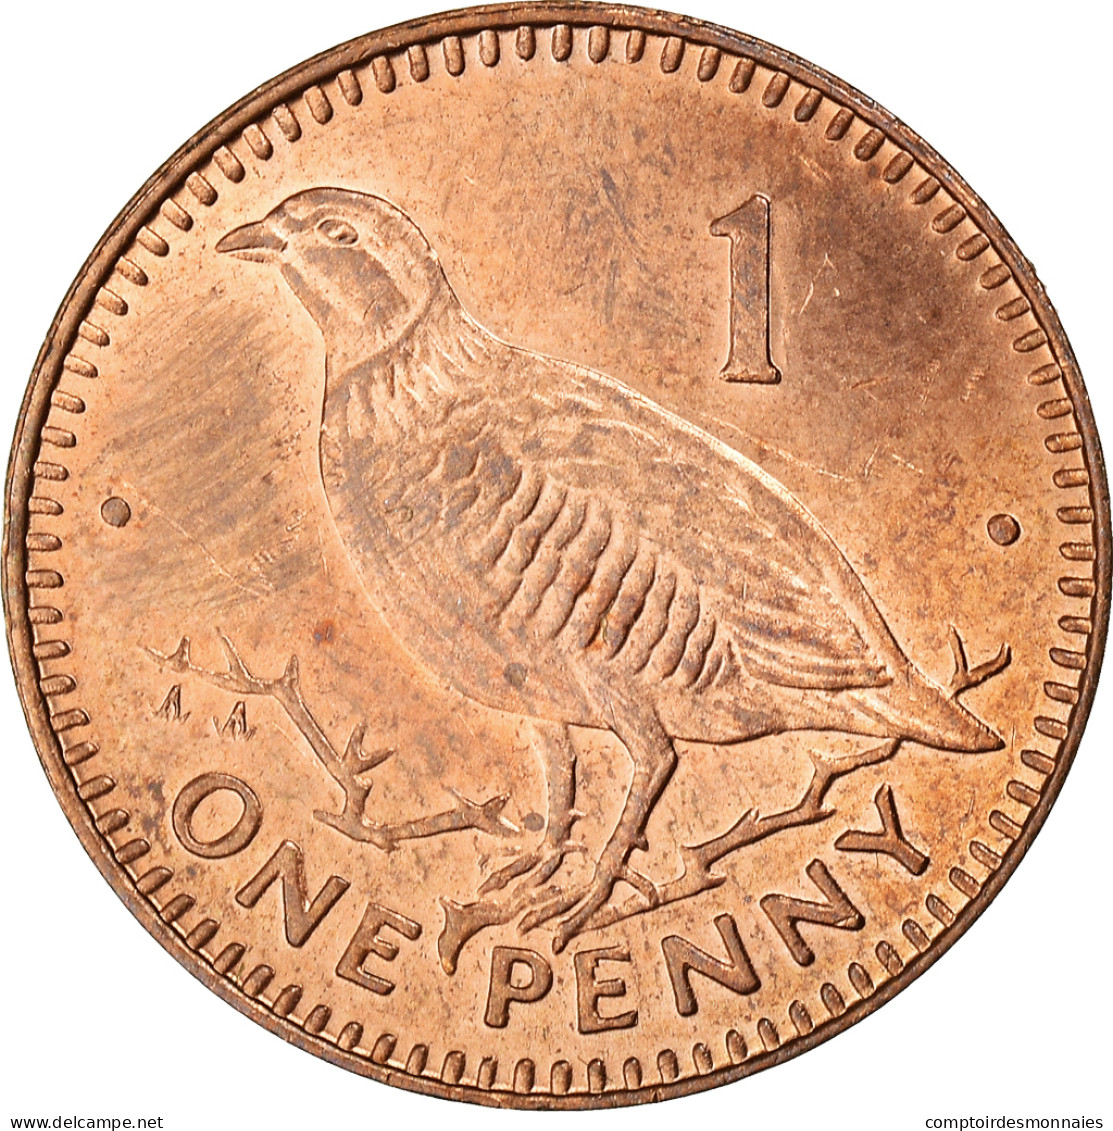 Monnaie, Gibraltar, Elizabeth II, Penny, 1992, TTB, Bronze, KM:20 - Gibraltar